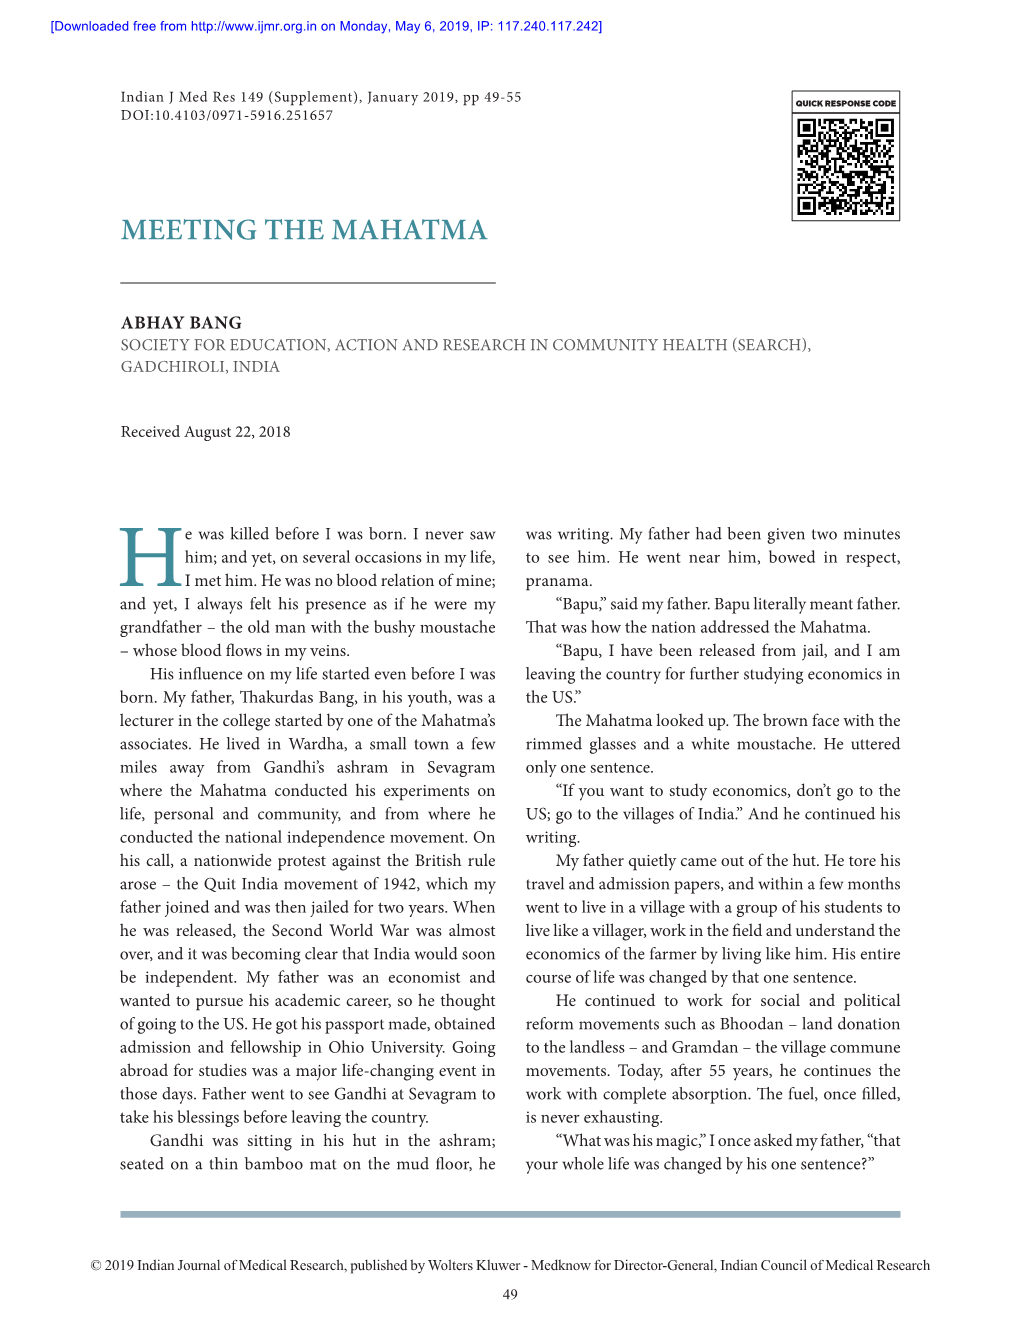 Meeting the Mahatma | IJMR Article